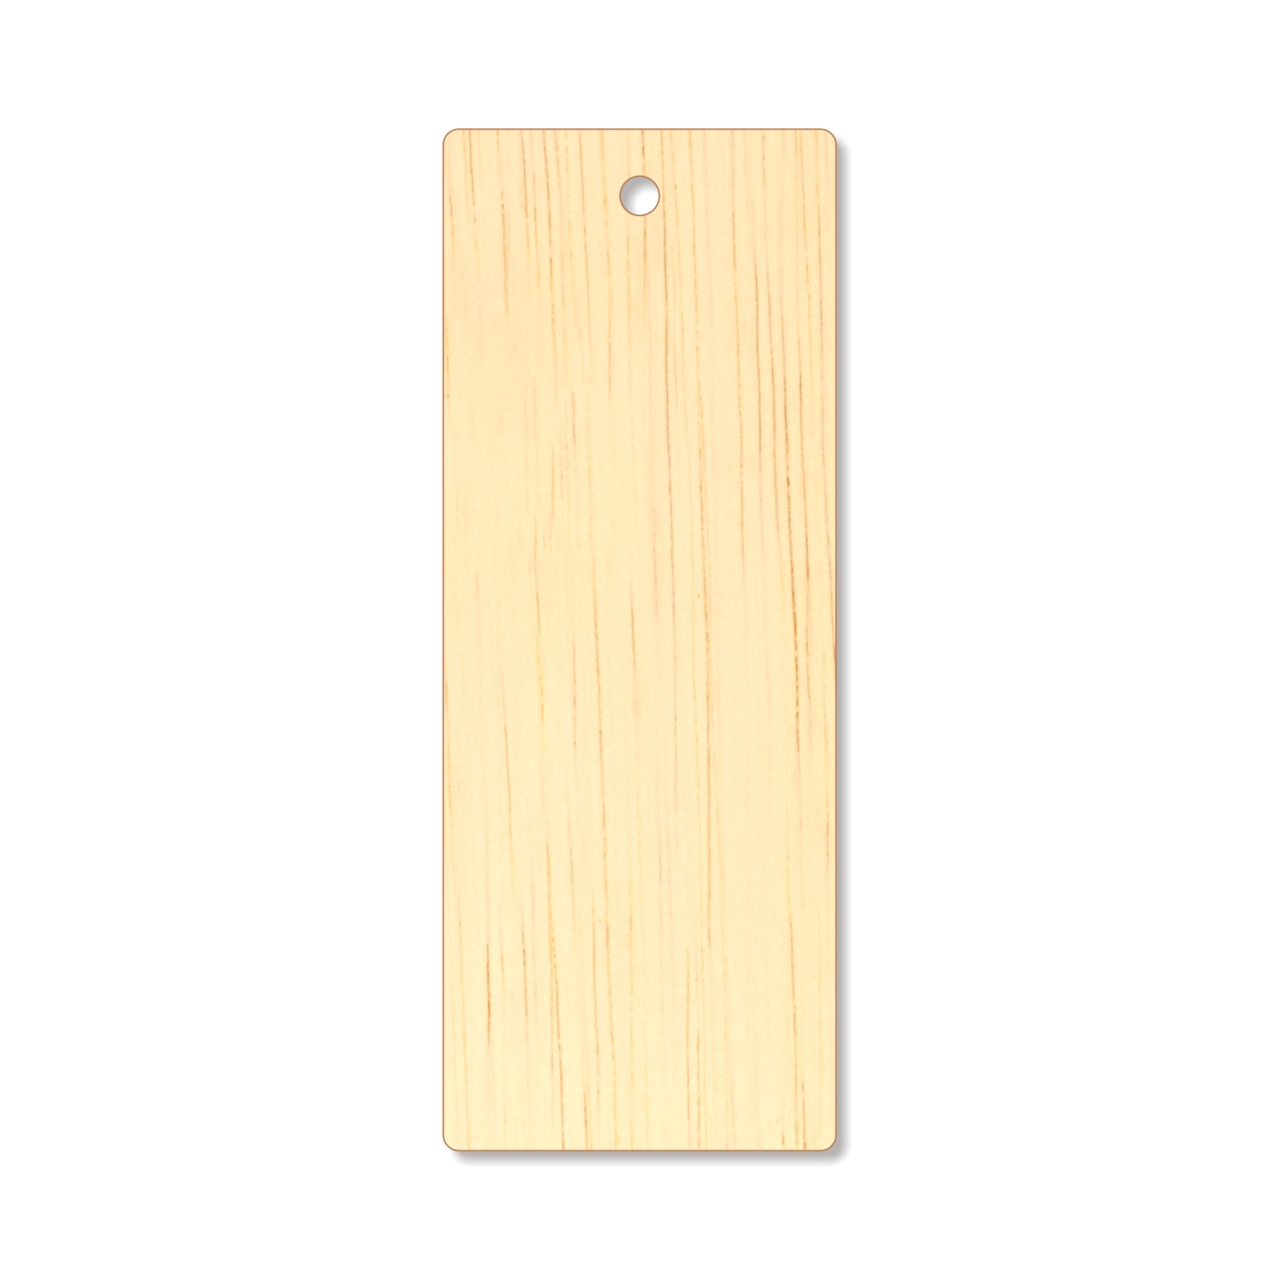 Dreptunghi rotunjit, placaj lemn, 7,5×5,5 cm